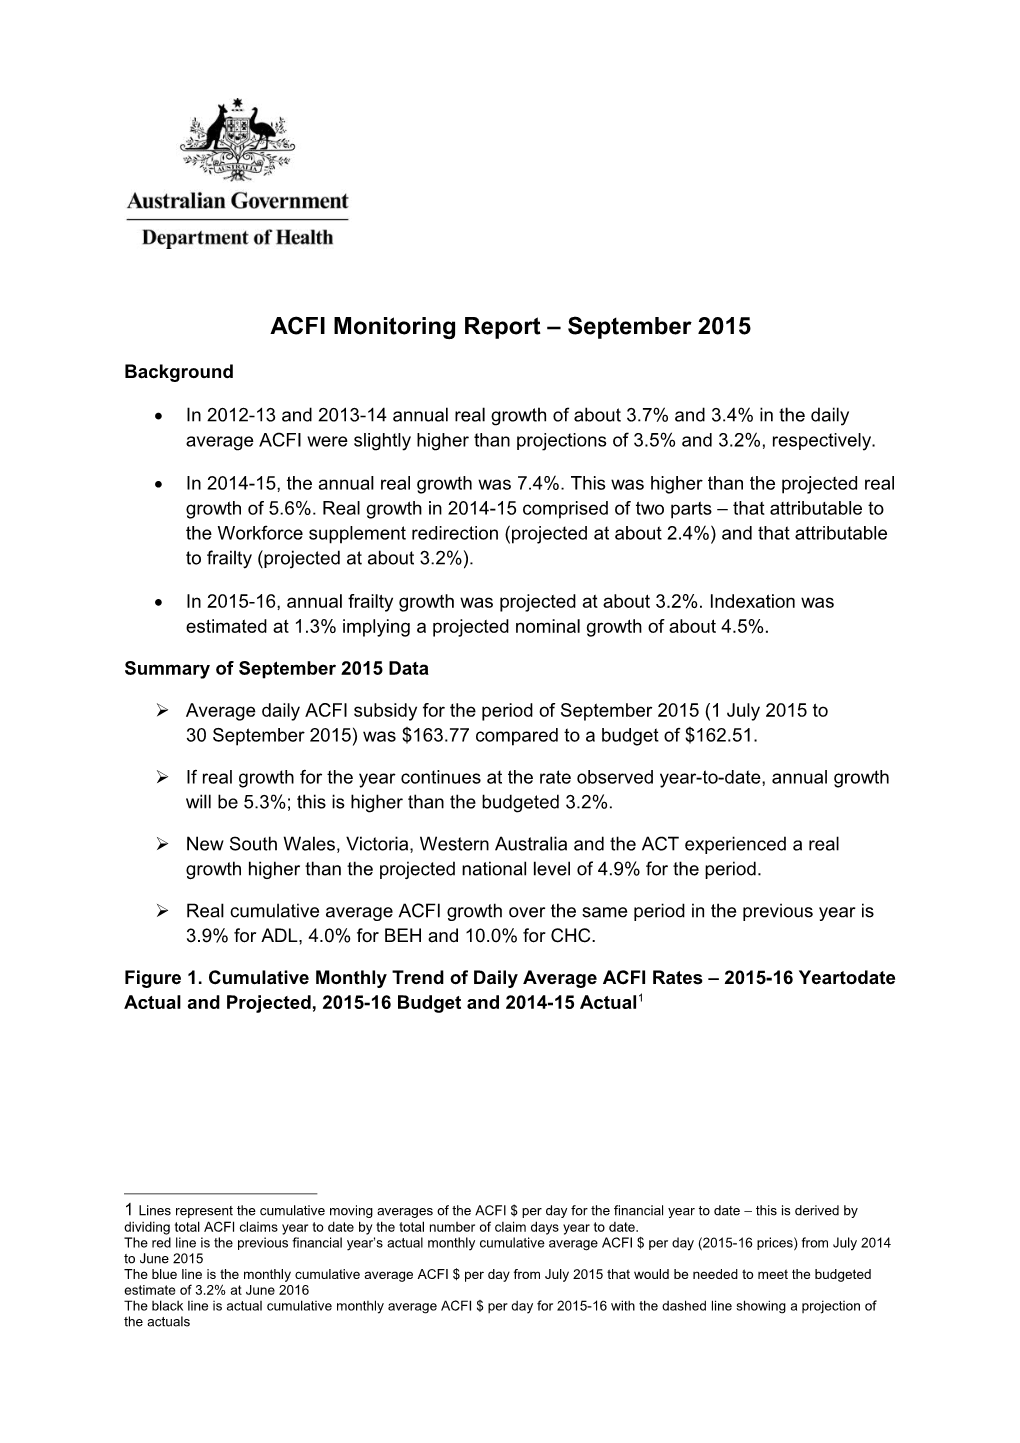 ACFI Monitoring Report September 2015